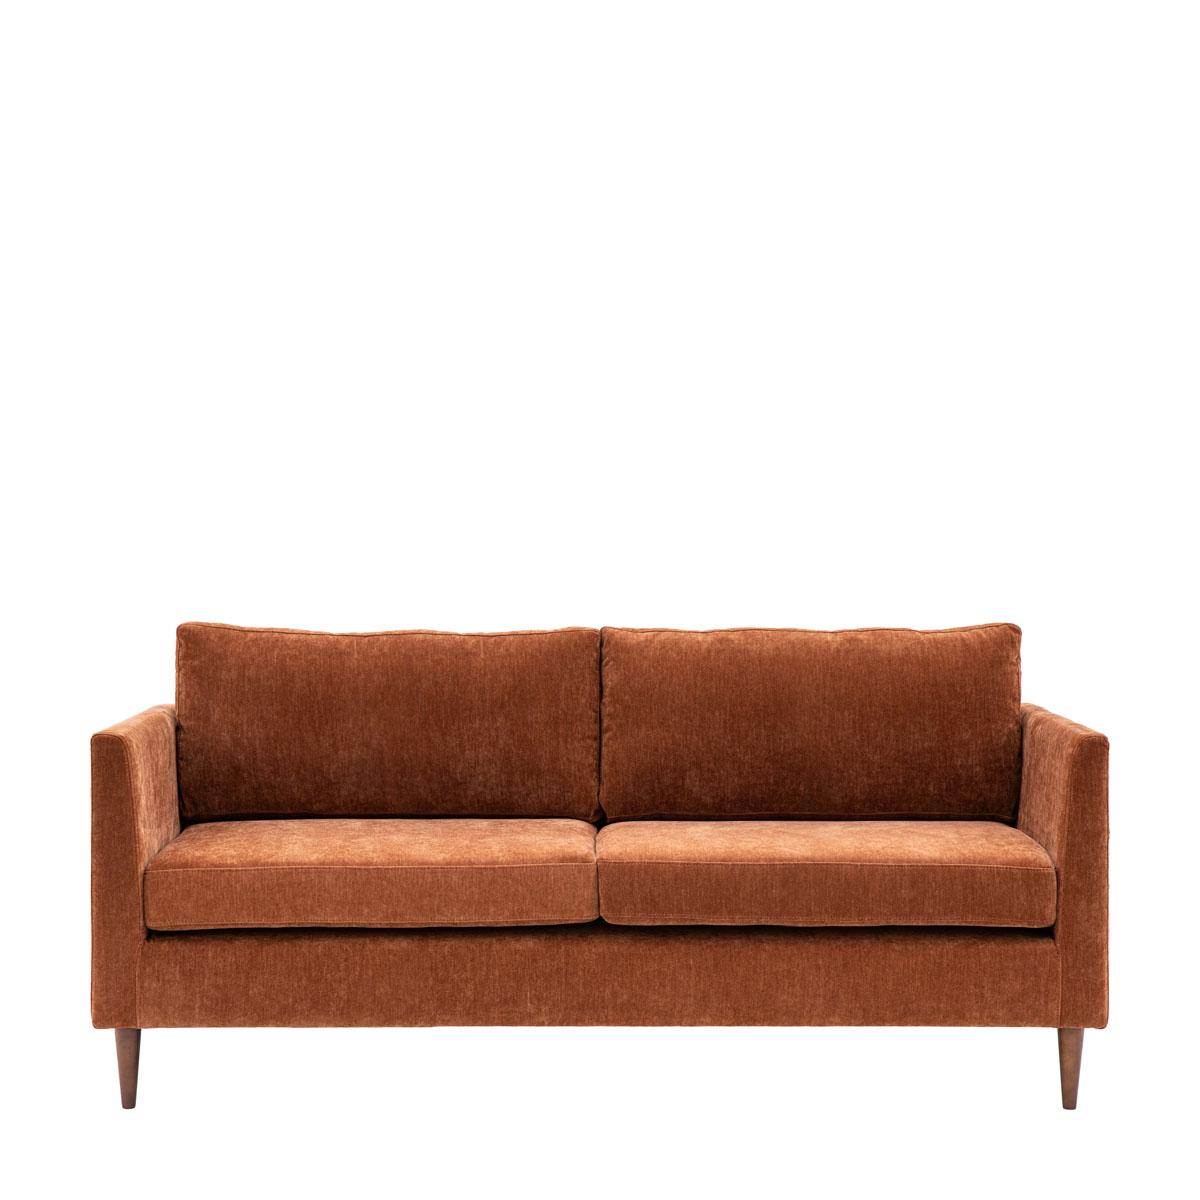 Gateford Sofa 3 Seater Rust 1870x840x840mm